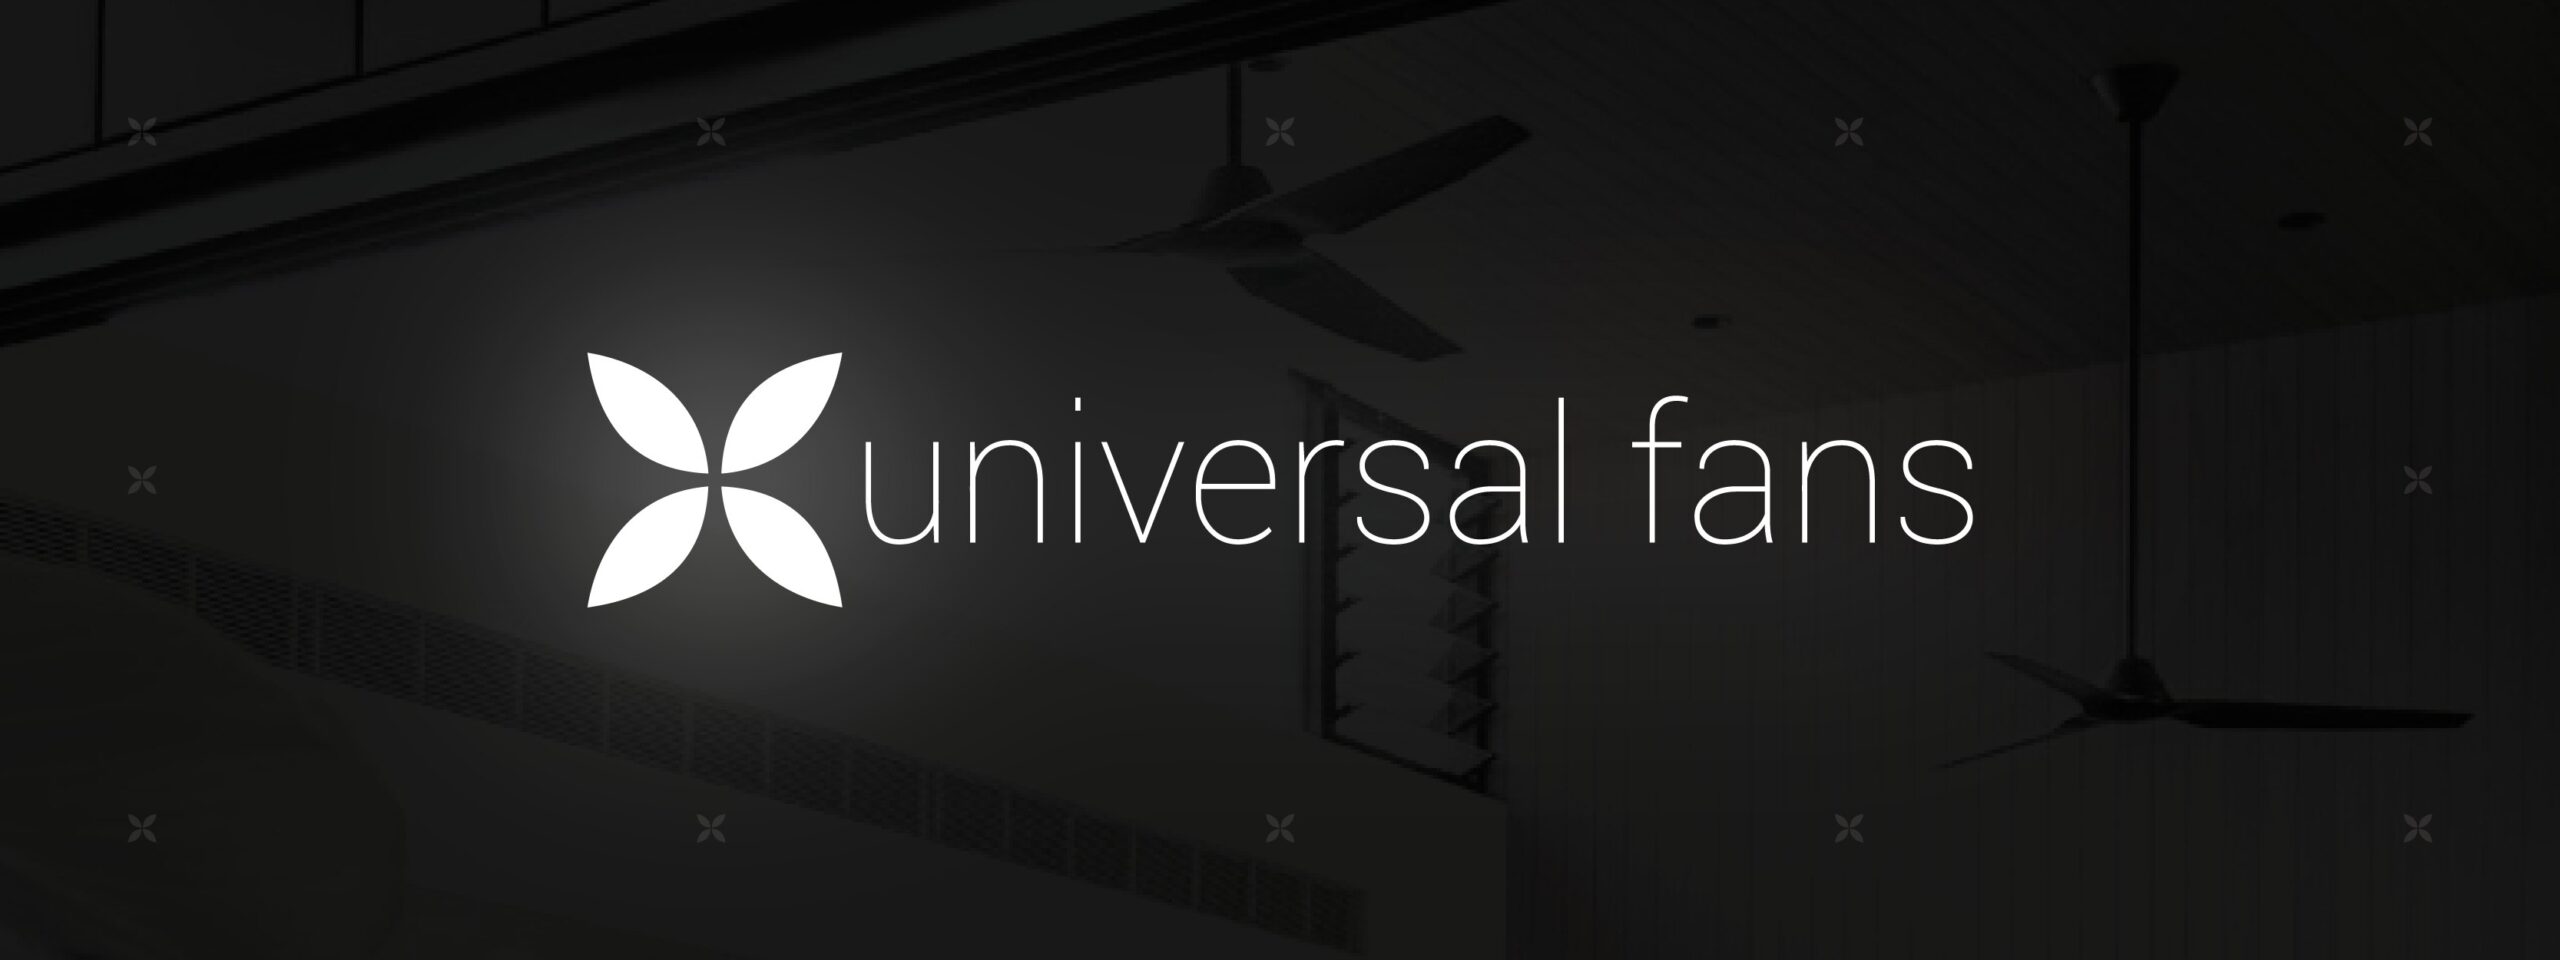 universal fans banner